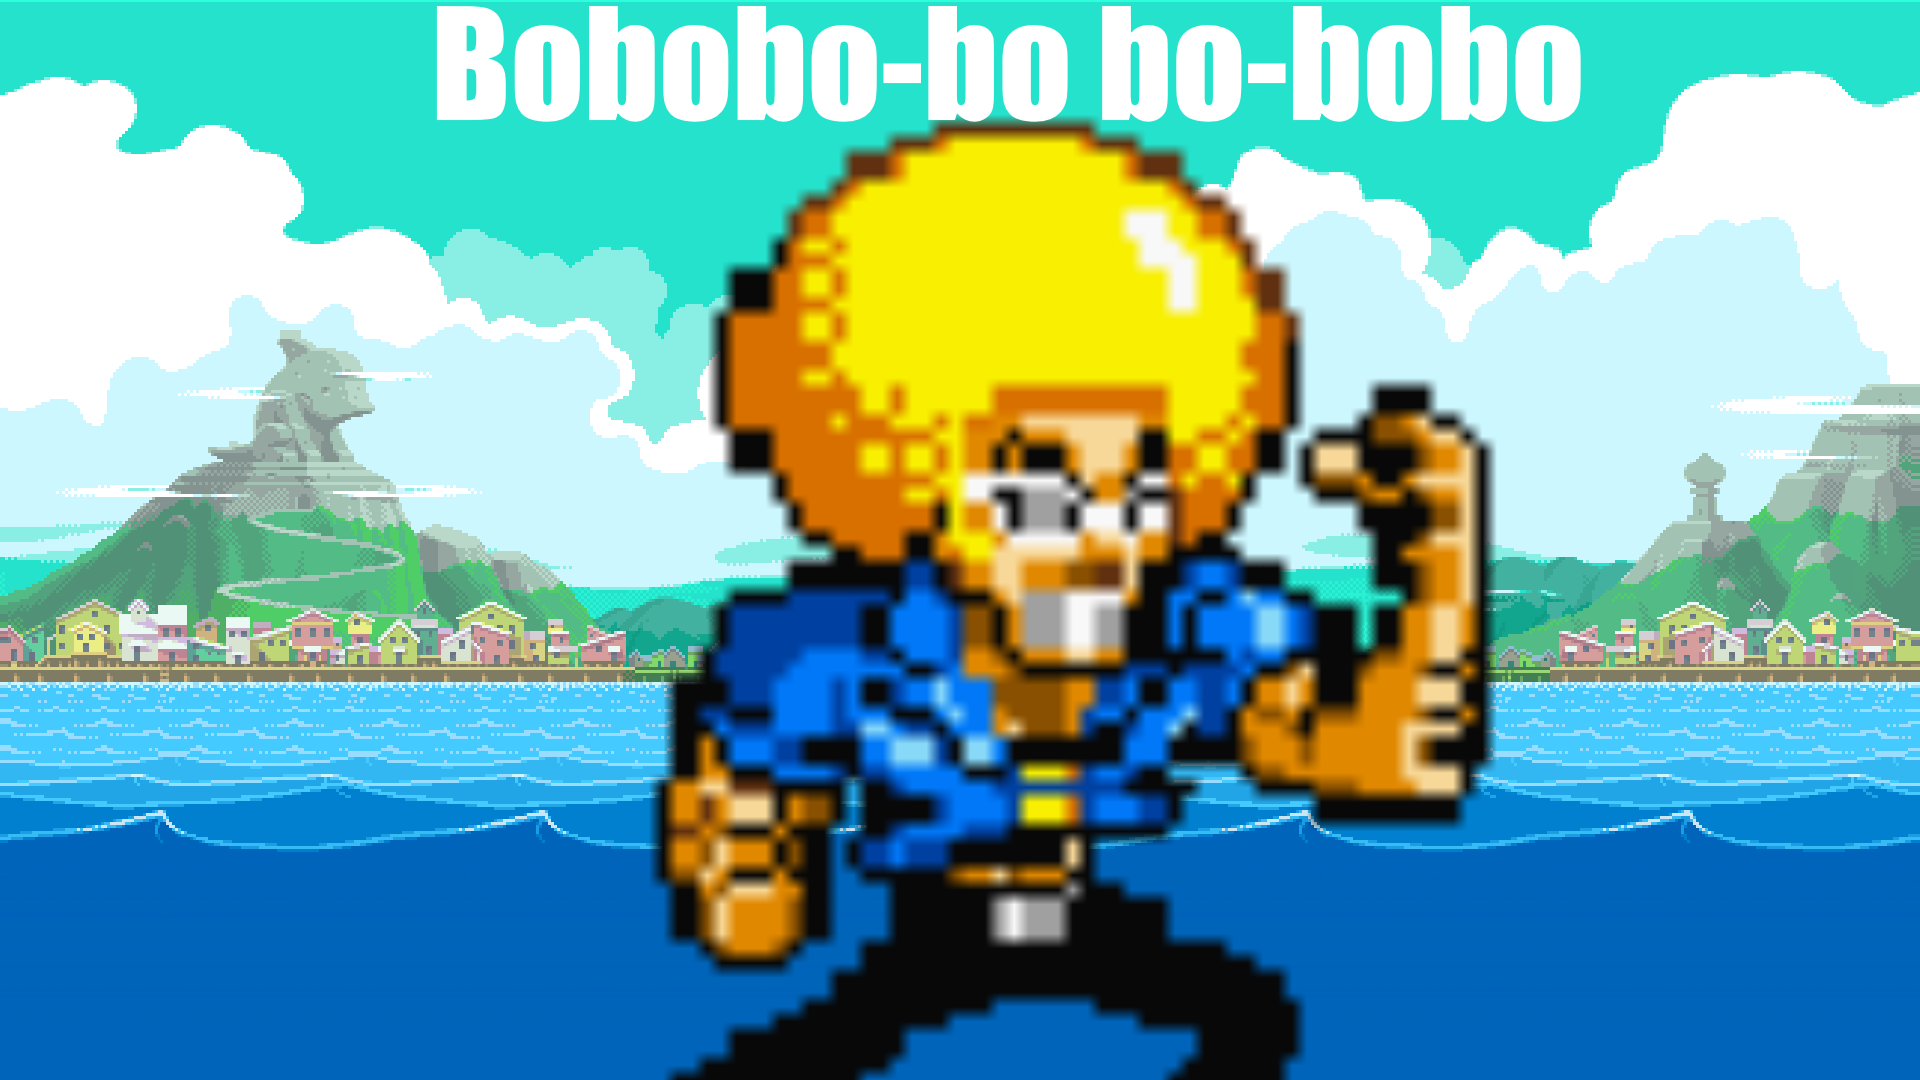 bobobobo-bobobo